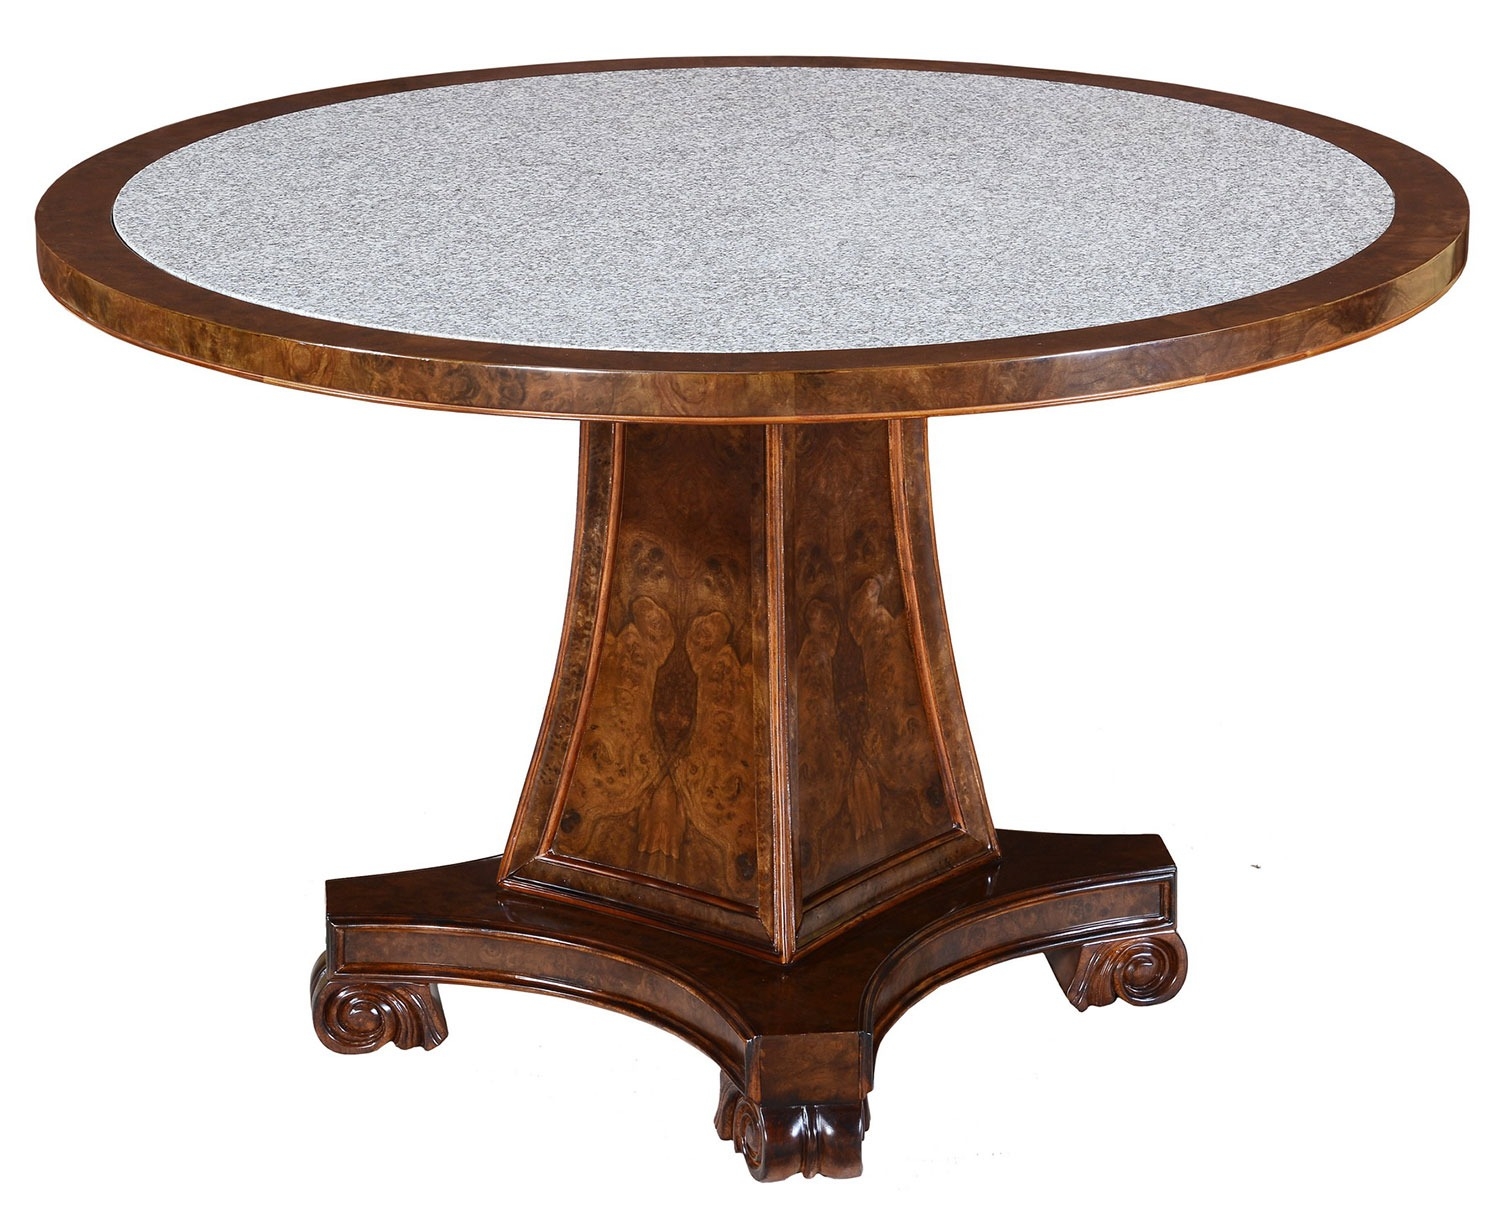 Robert Adam style round dining table